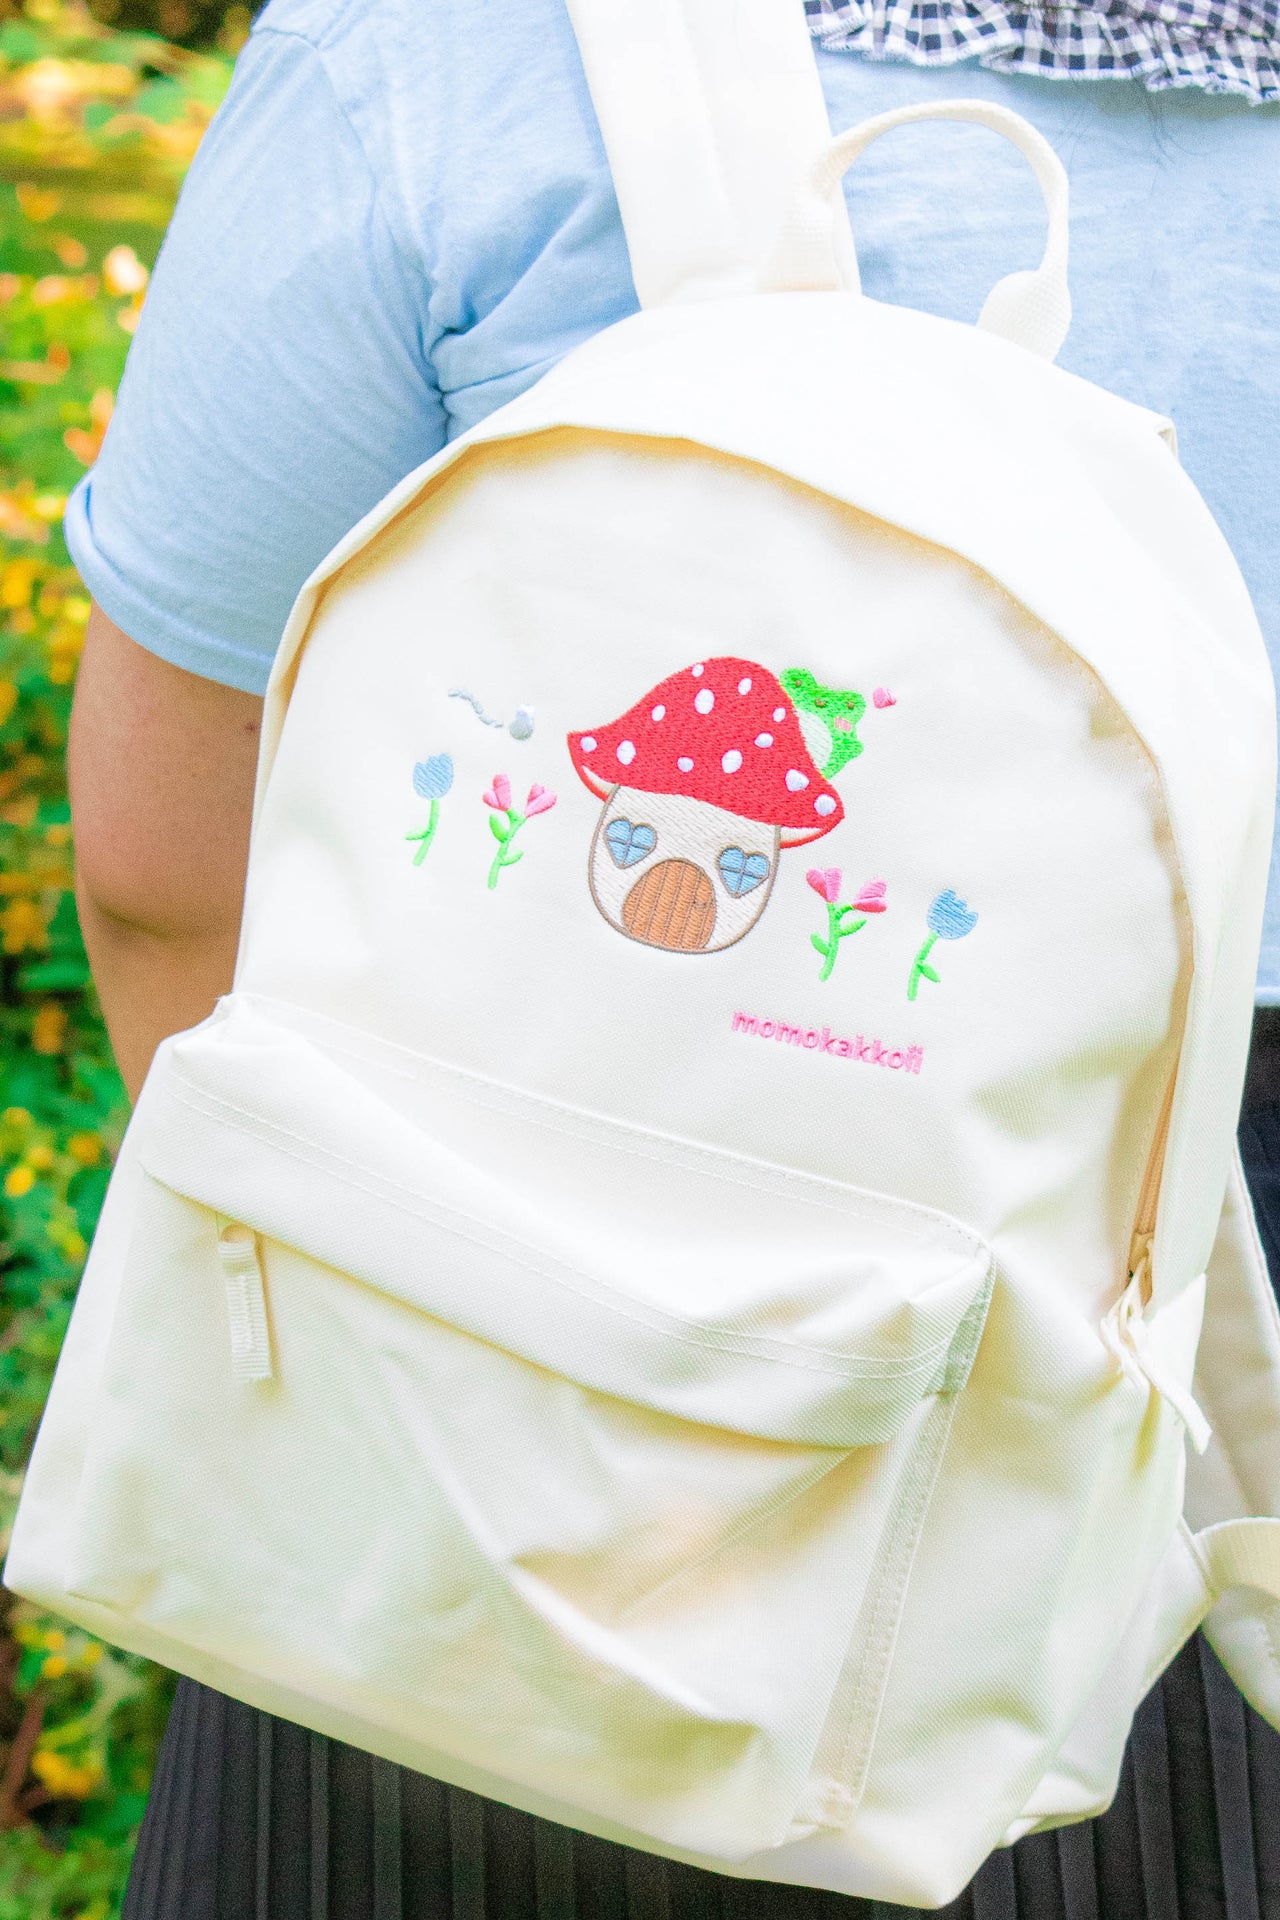 Mushroom House Embroidered Backpack - Momokakkoii